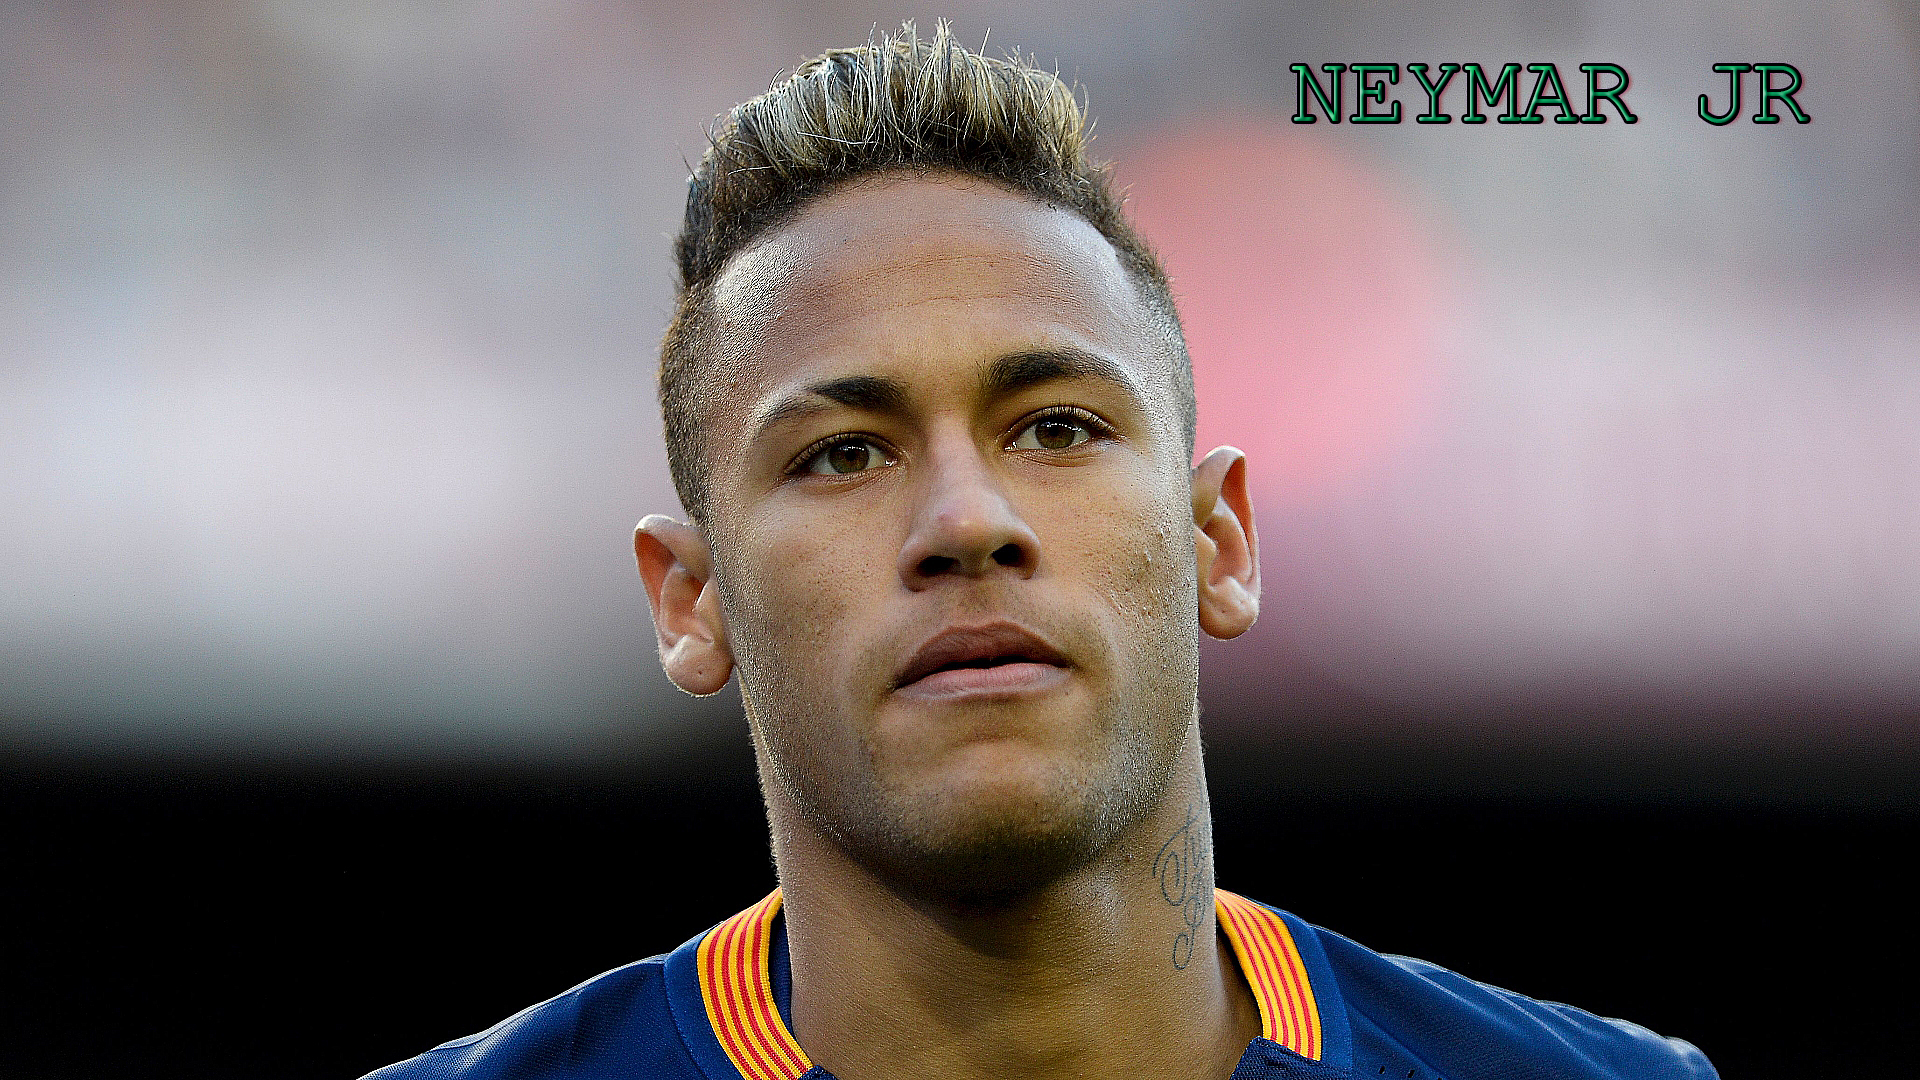 neymar-jr-new-images-2018